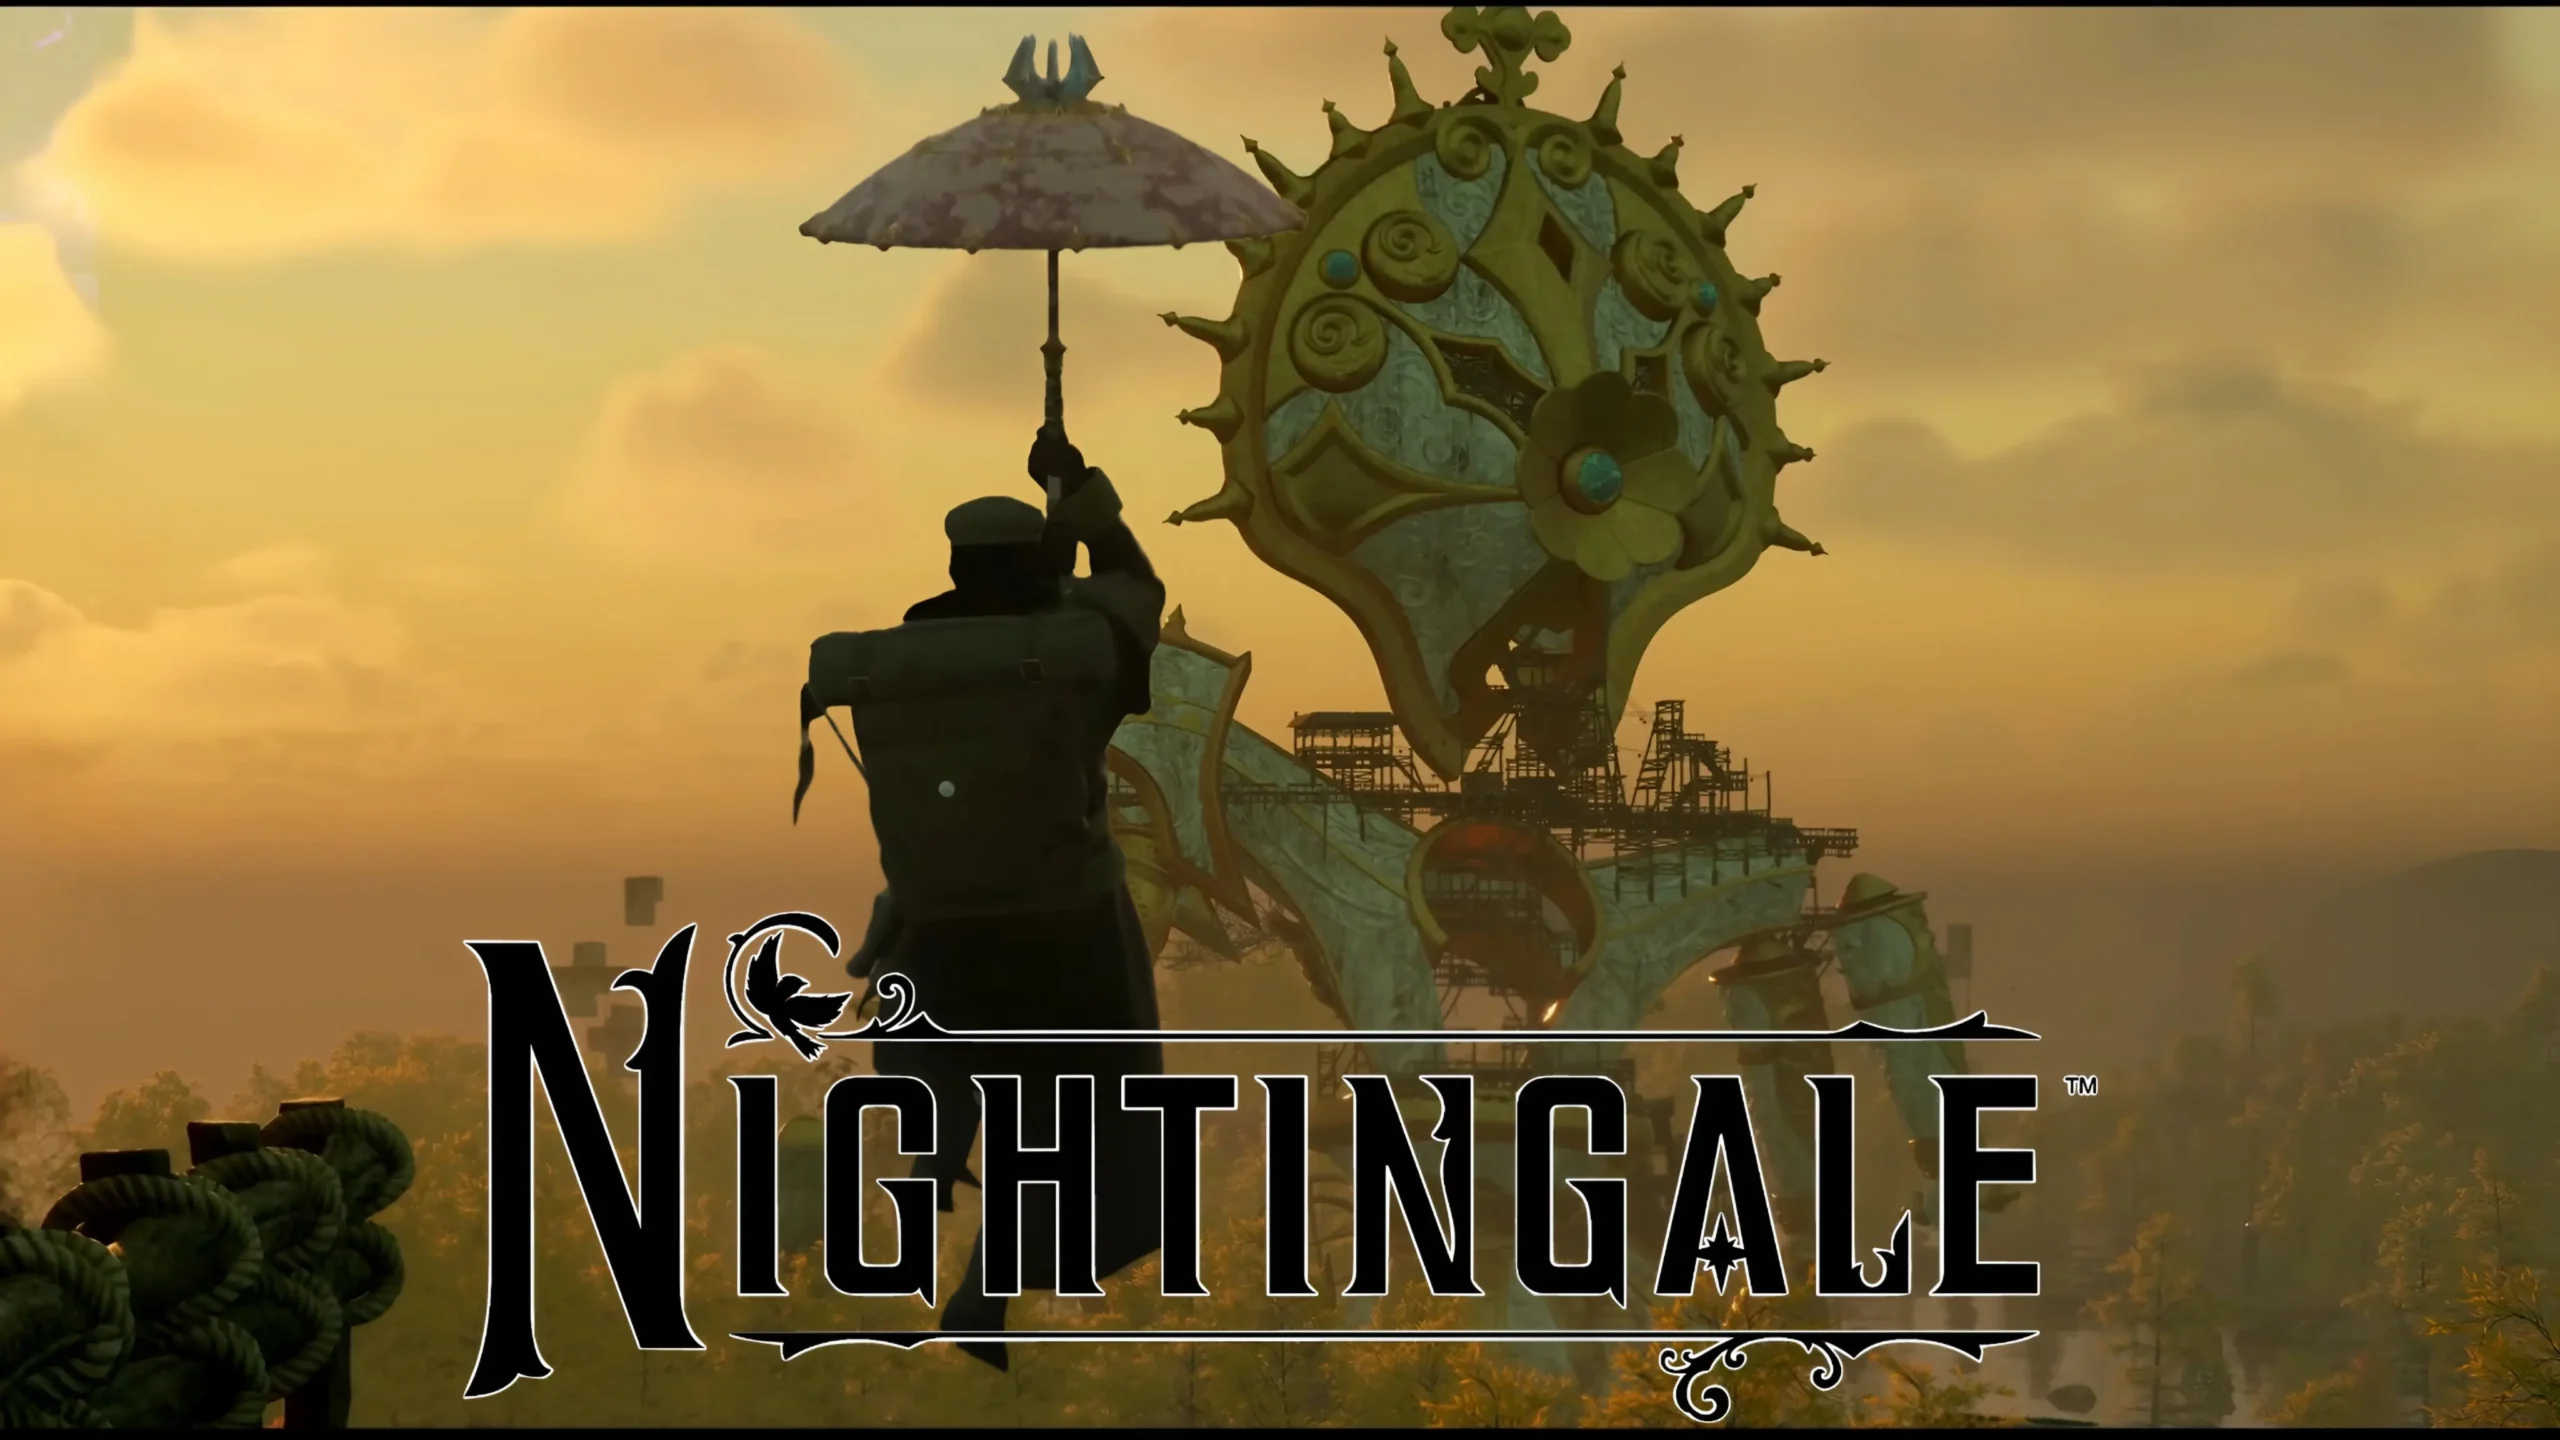 Nightingale Review